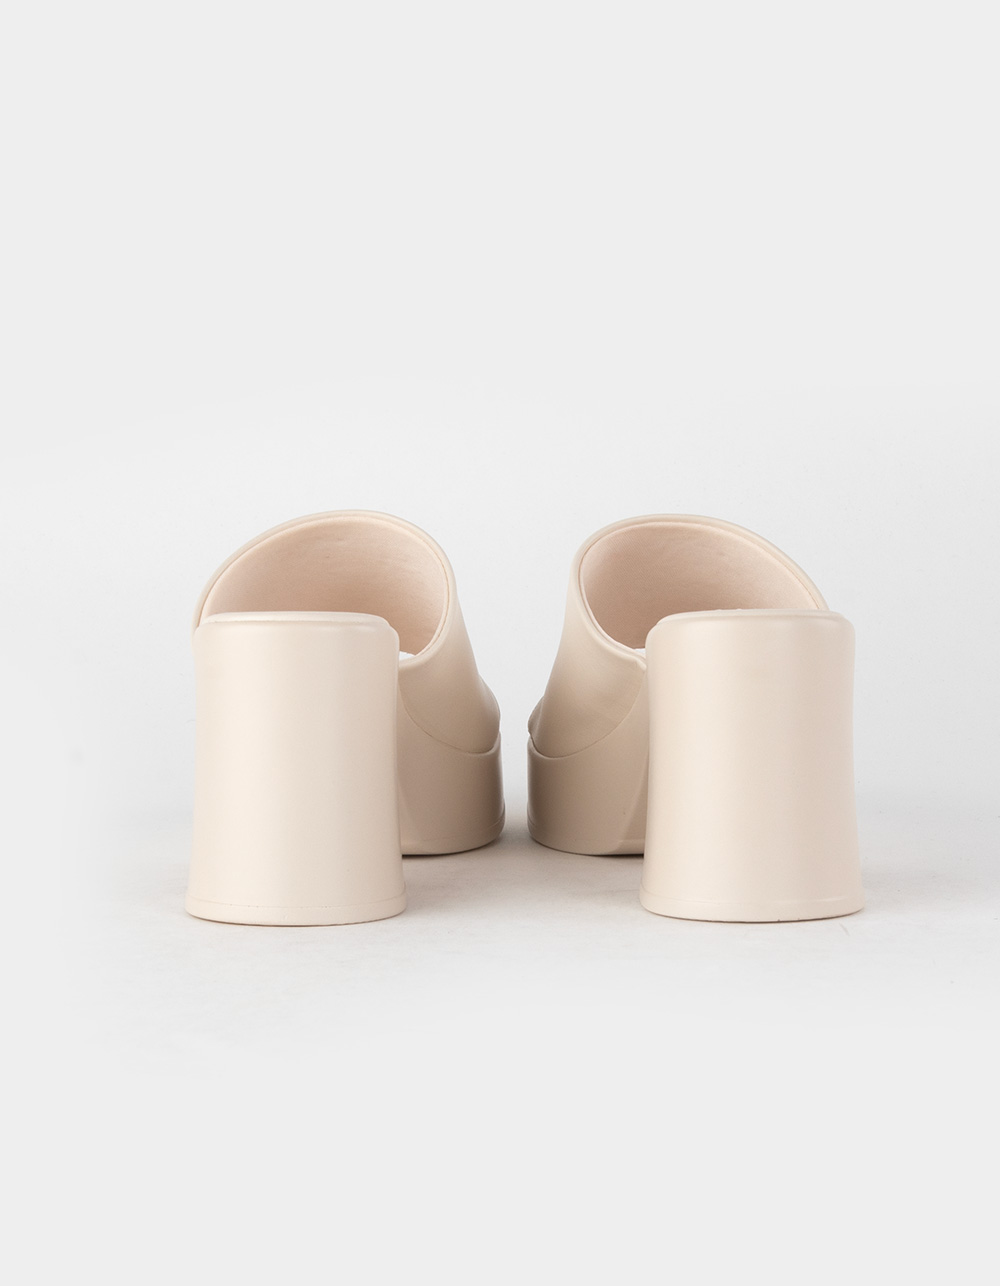 SODA Typo Womens Platform Sandals - BONE | Tillys